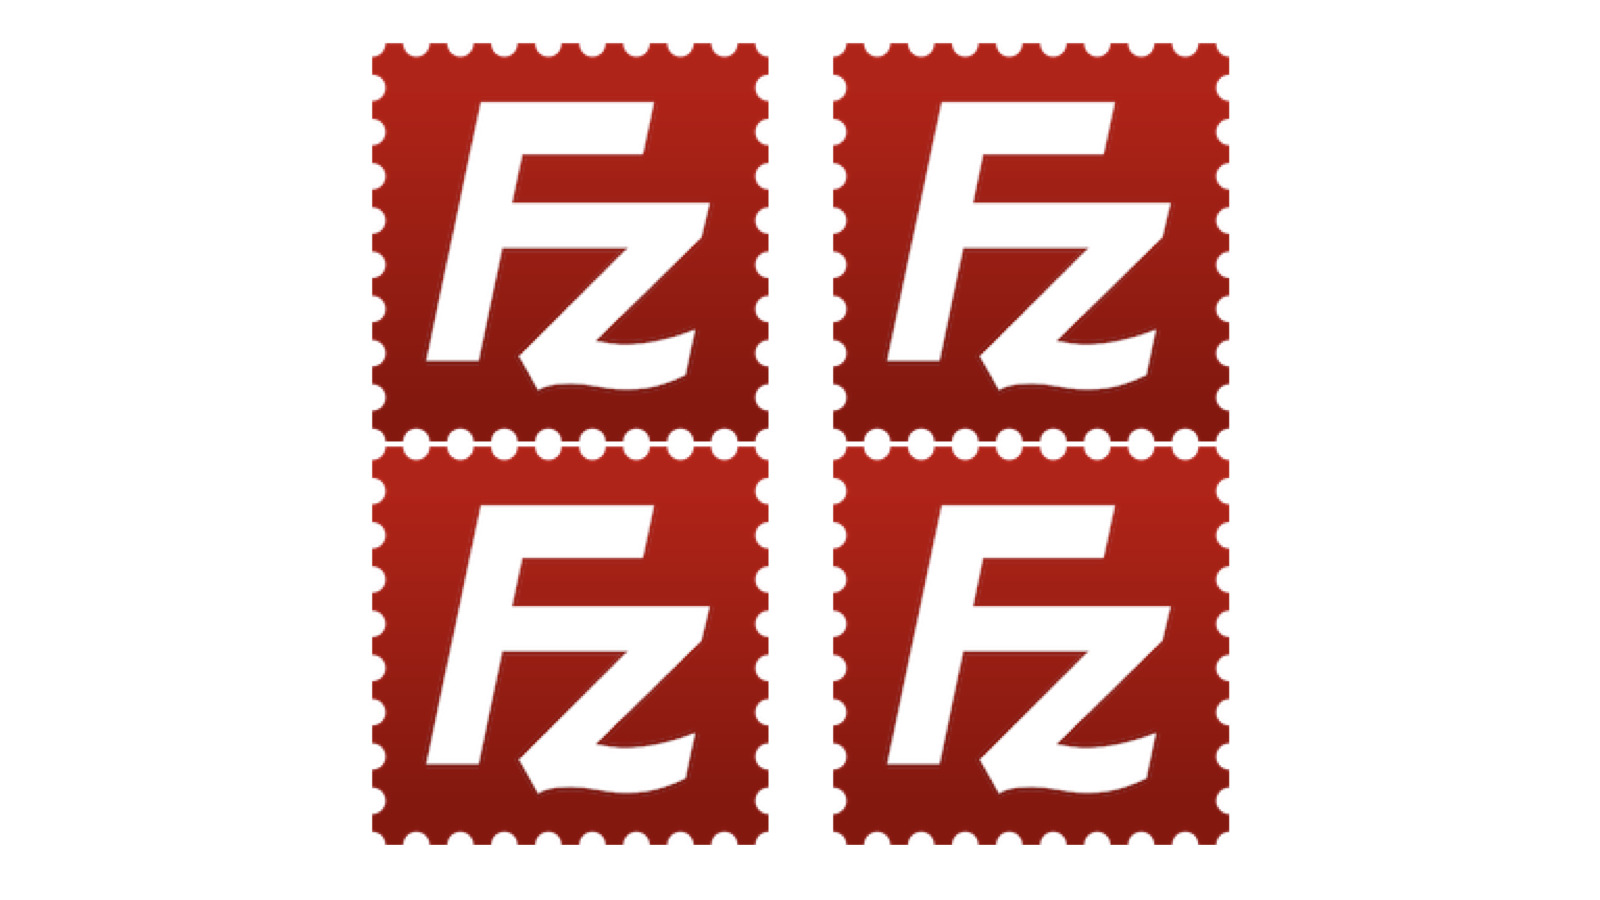 FileZillaのロゴ